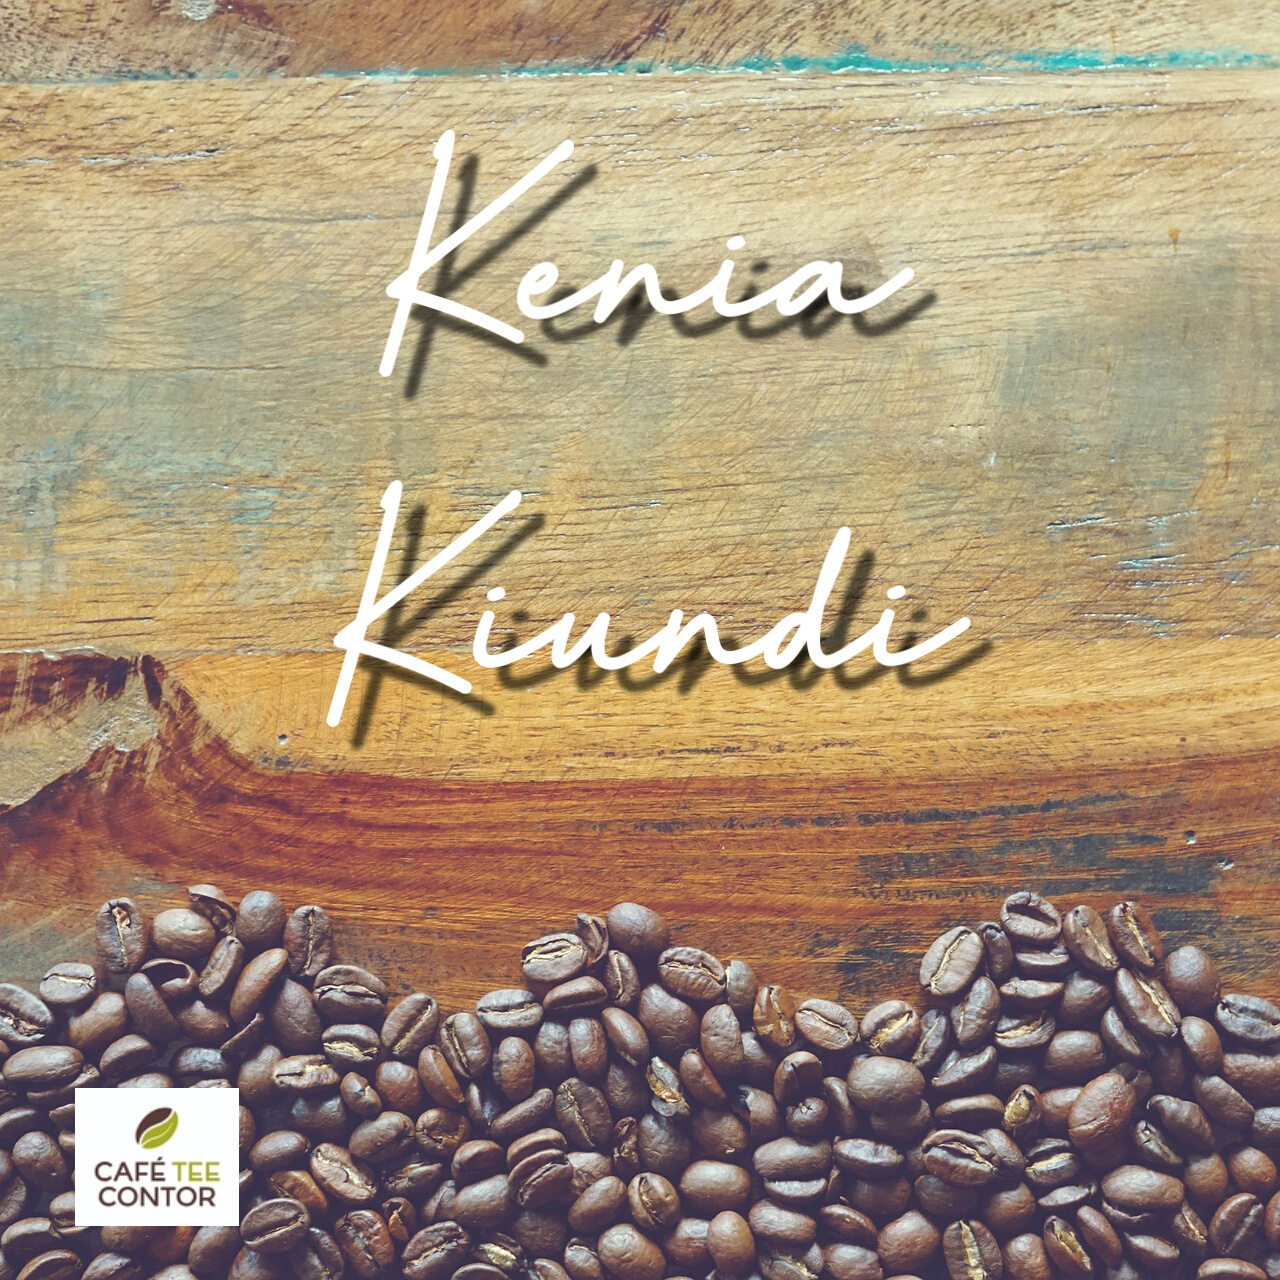 Kaffee Kenia Kiundi